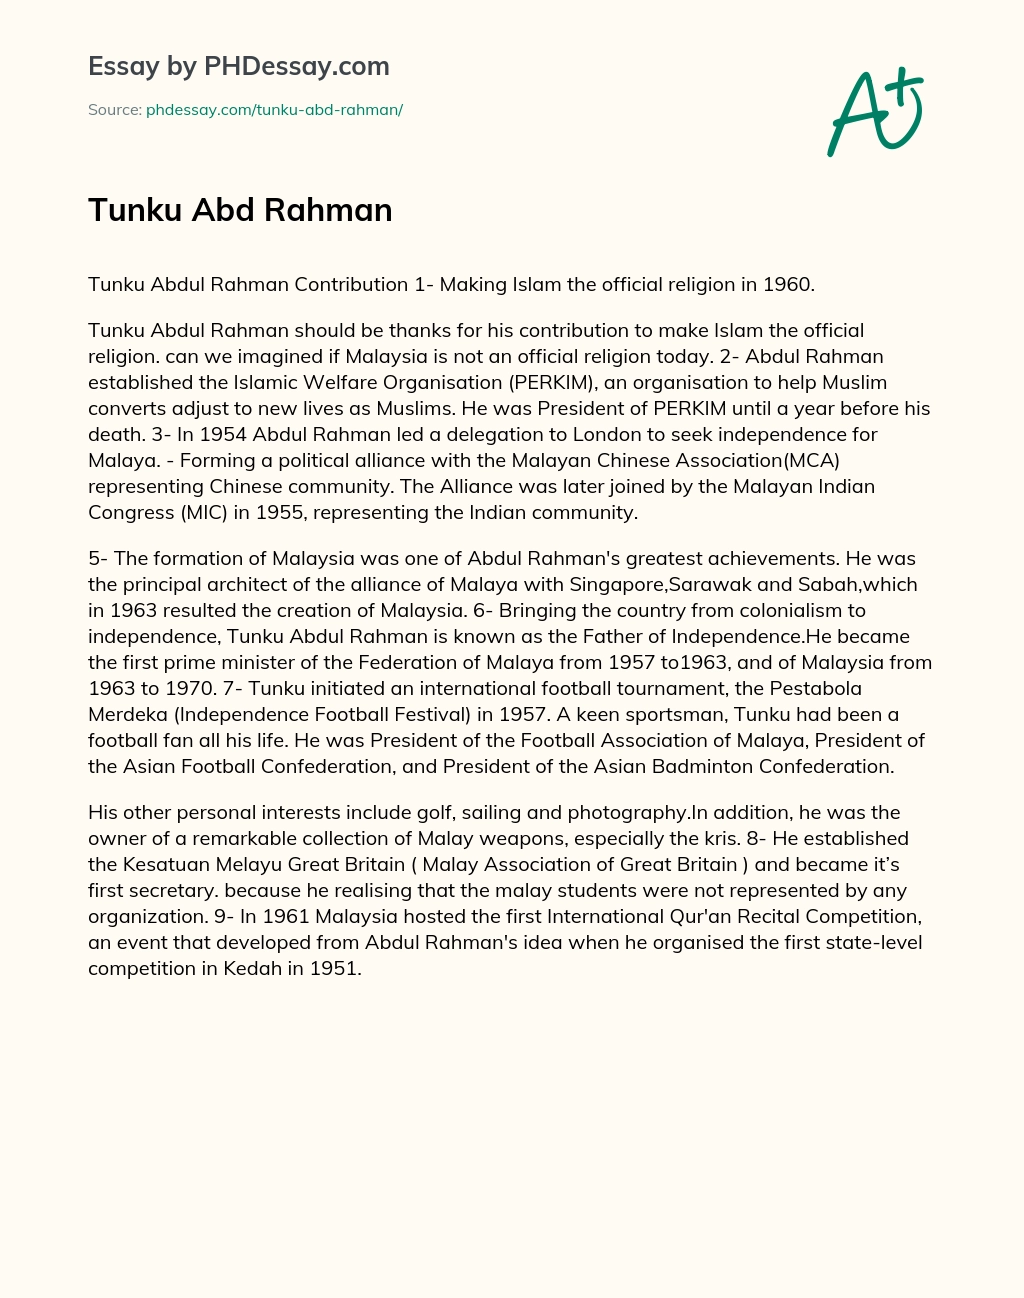 Tunku Abd Rahman essay